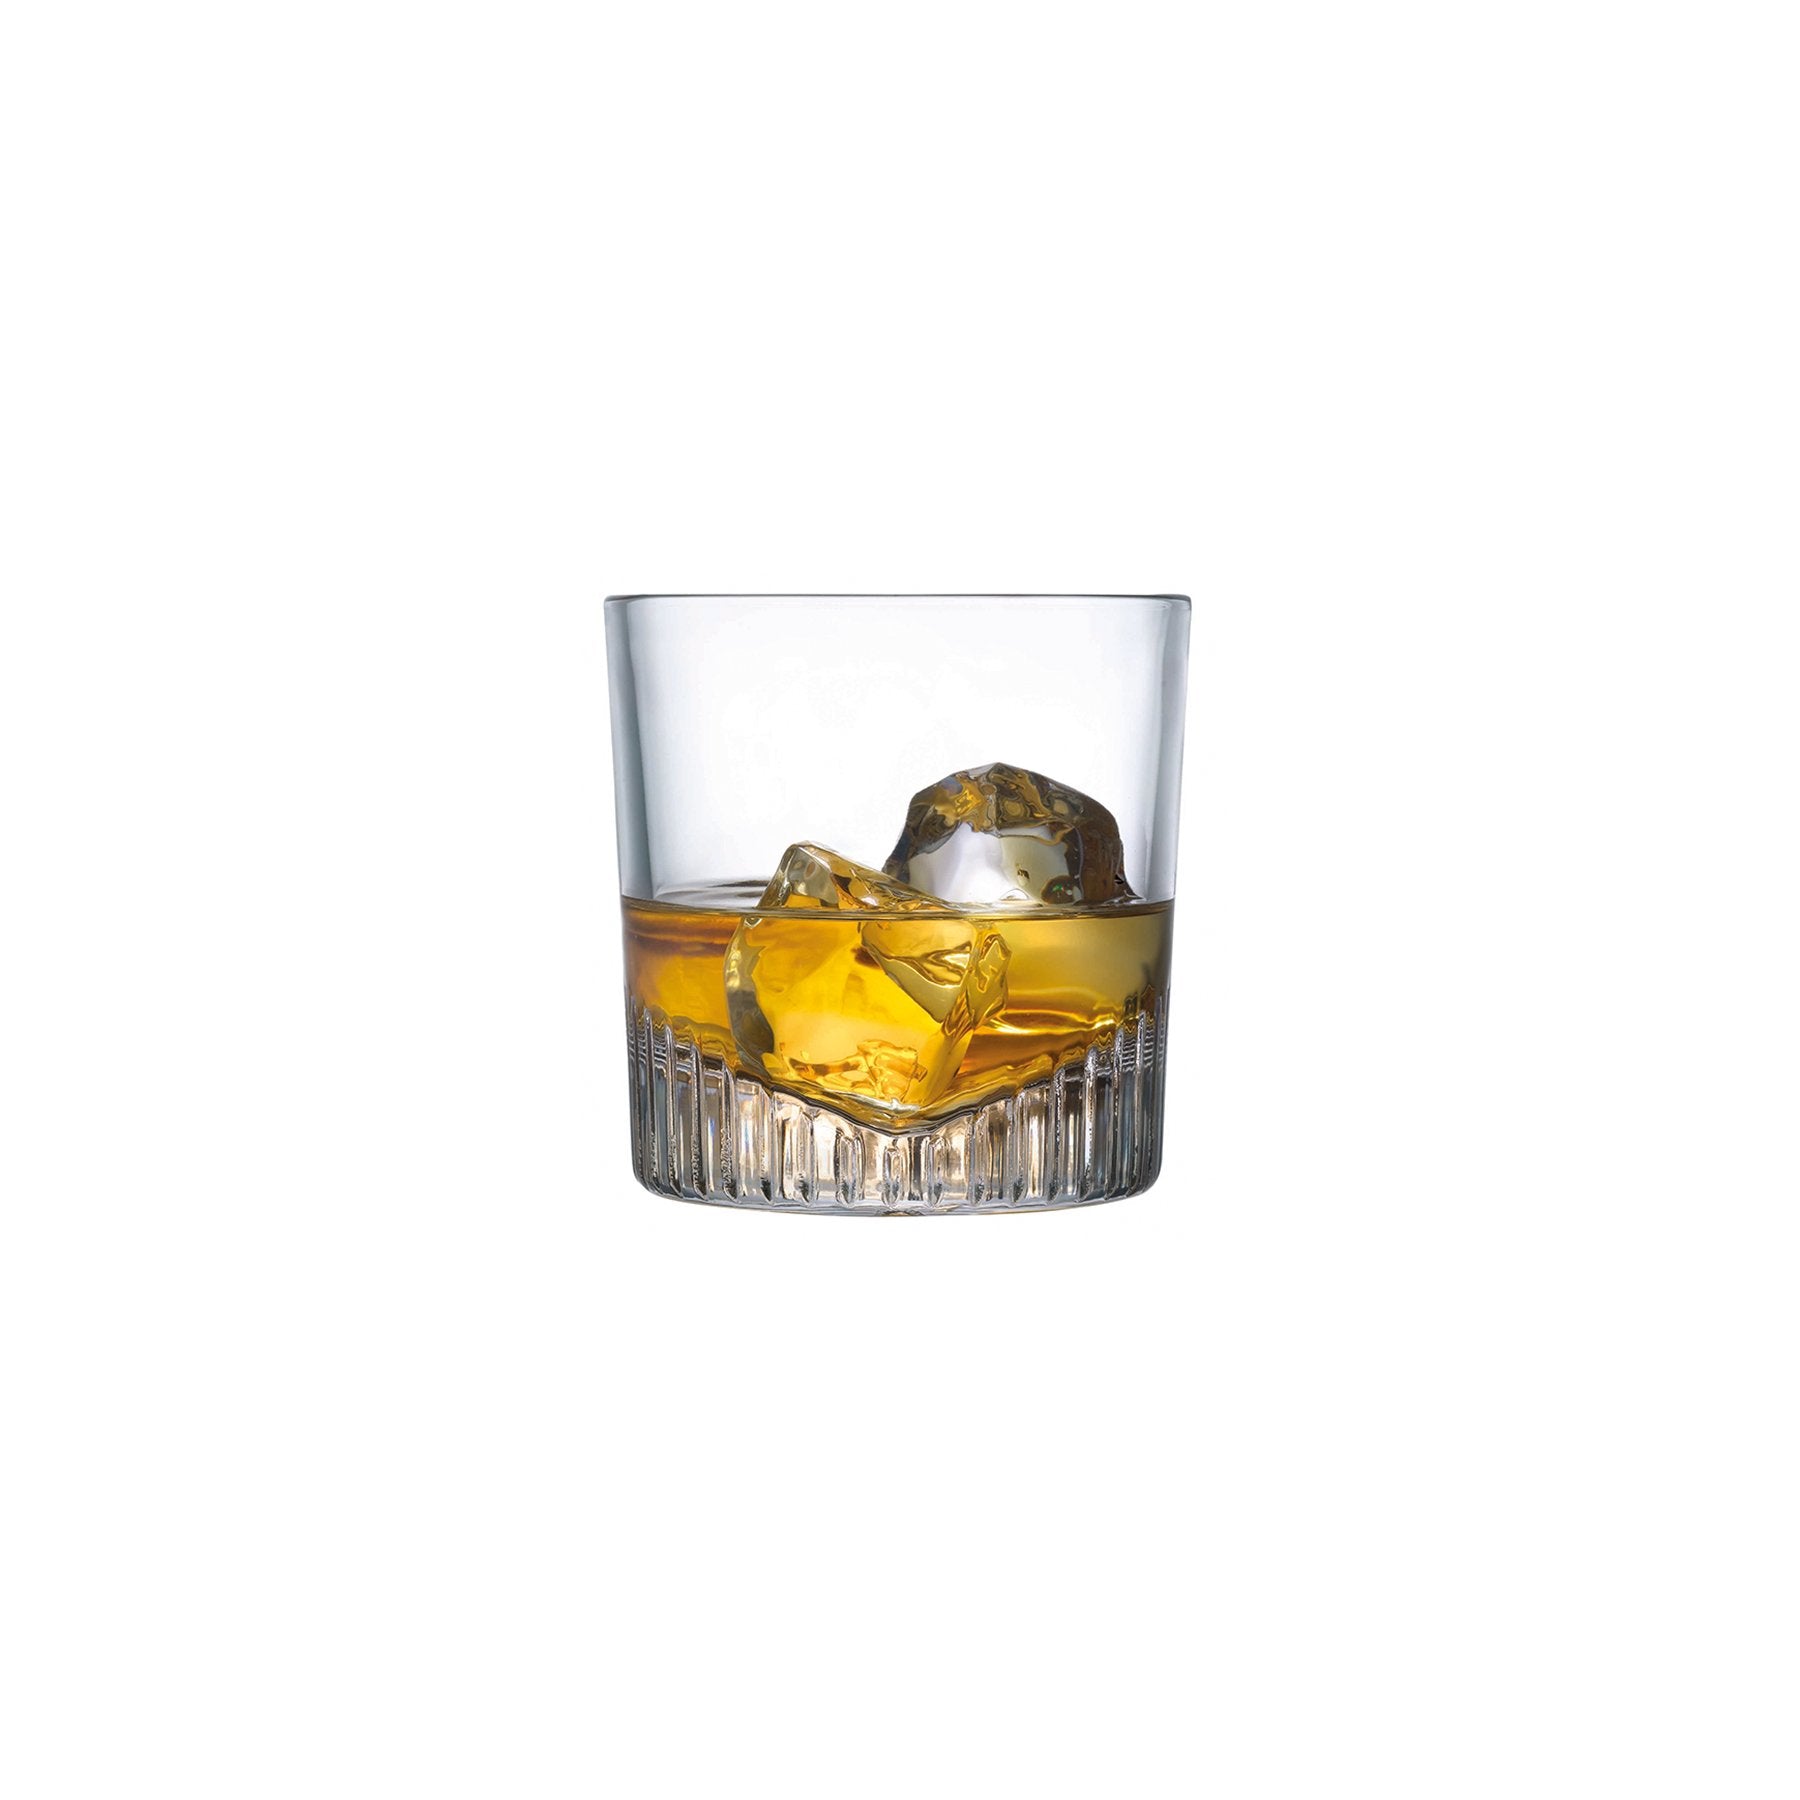 Whiskey Glasses,Scotch Glasses,Old Fashioned Whiskey Glasses